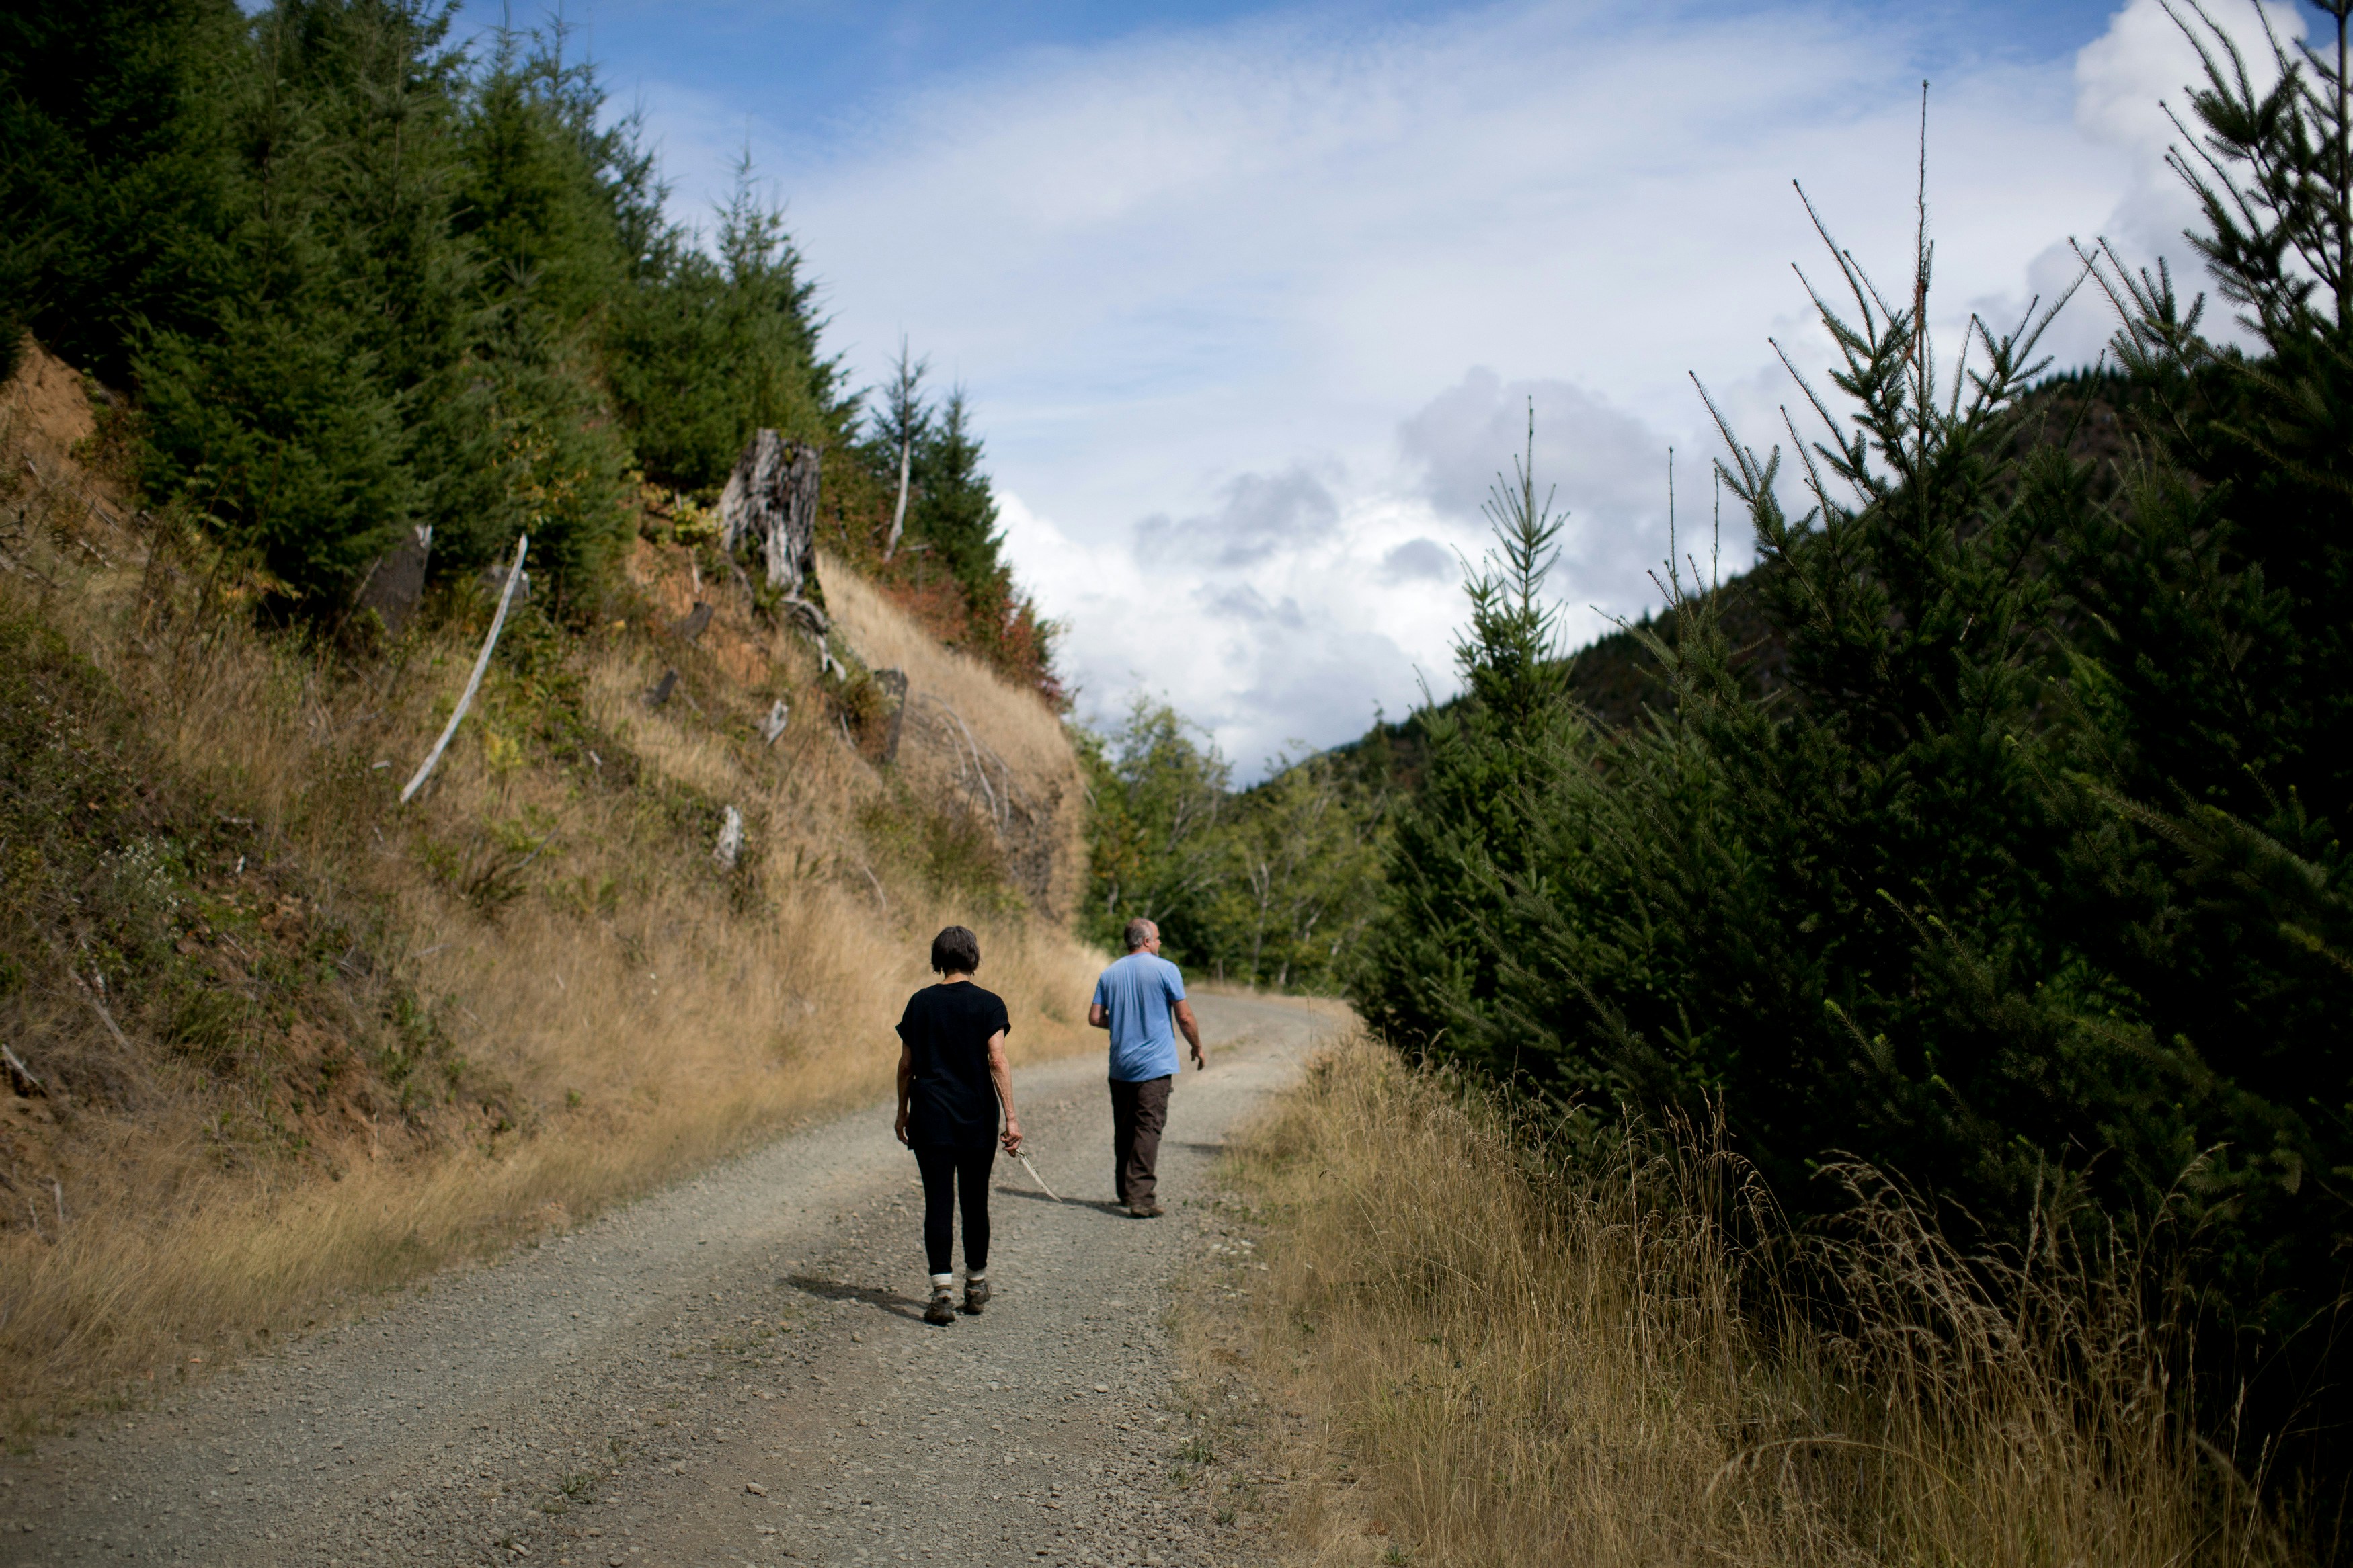 OREGON COAST, OR - SEPTEMBER 8: Barbara Davis and Rio Davidson walk along a logging road on land owned by Weyerhaeuser along the Oregon coast mountains. September 8, 2018 (Photo by Beth Nakamura For The Intercept)